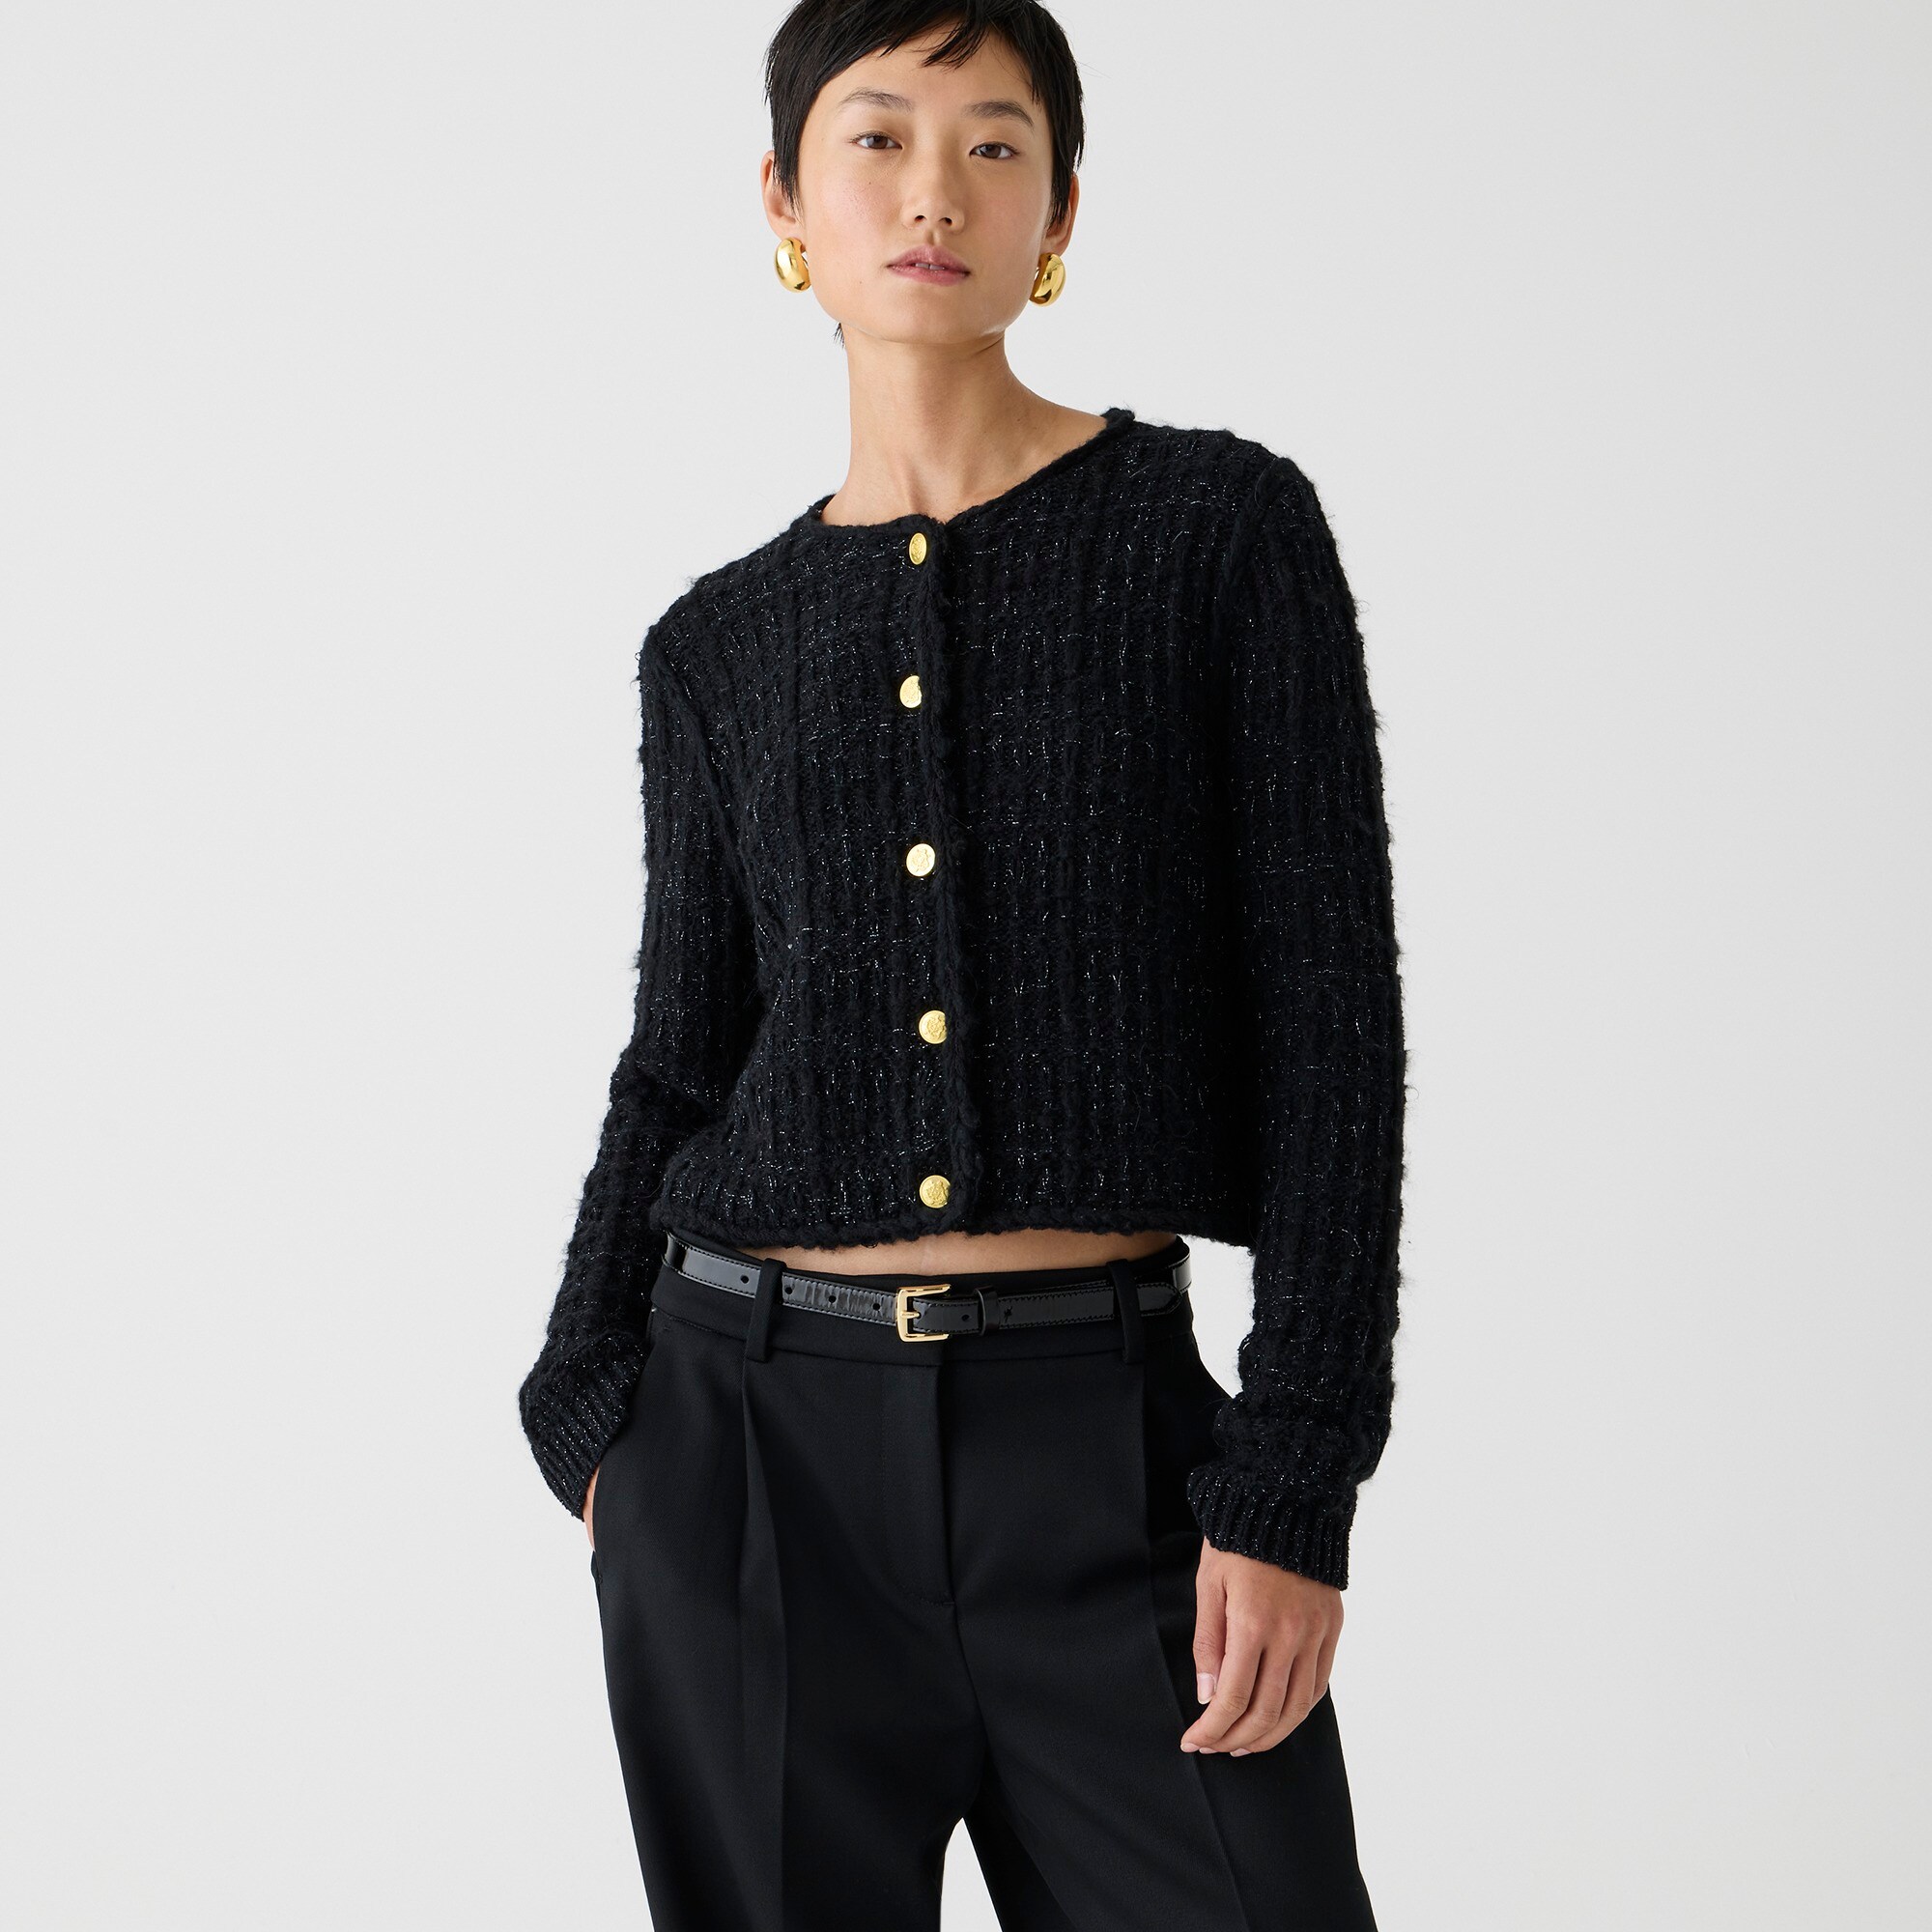 J.Crew: Plaid Lady Jacket With Textured Lurex® Metallic Threads For Women